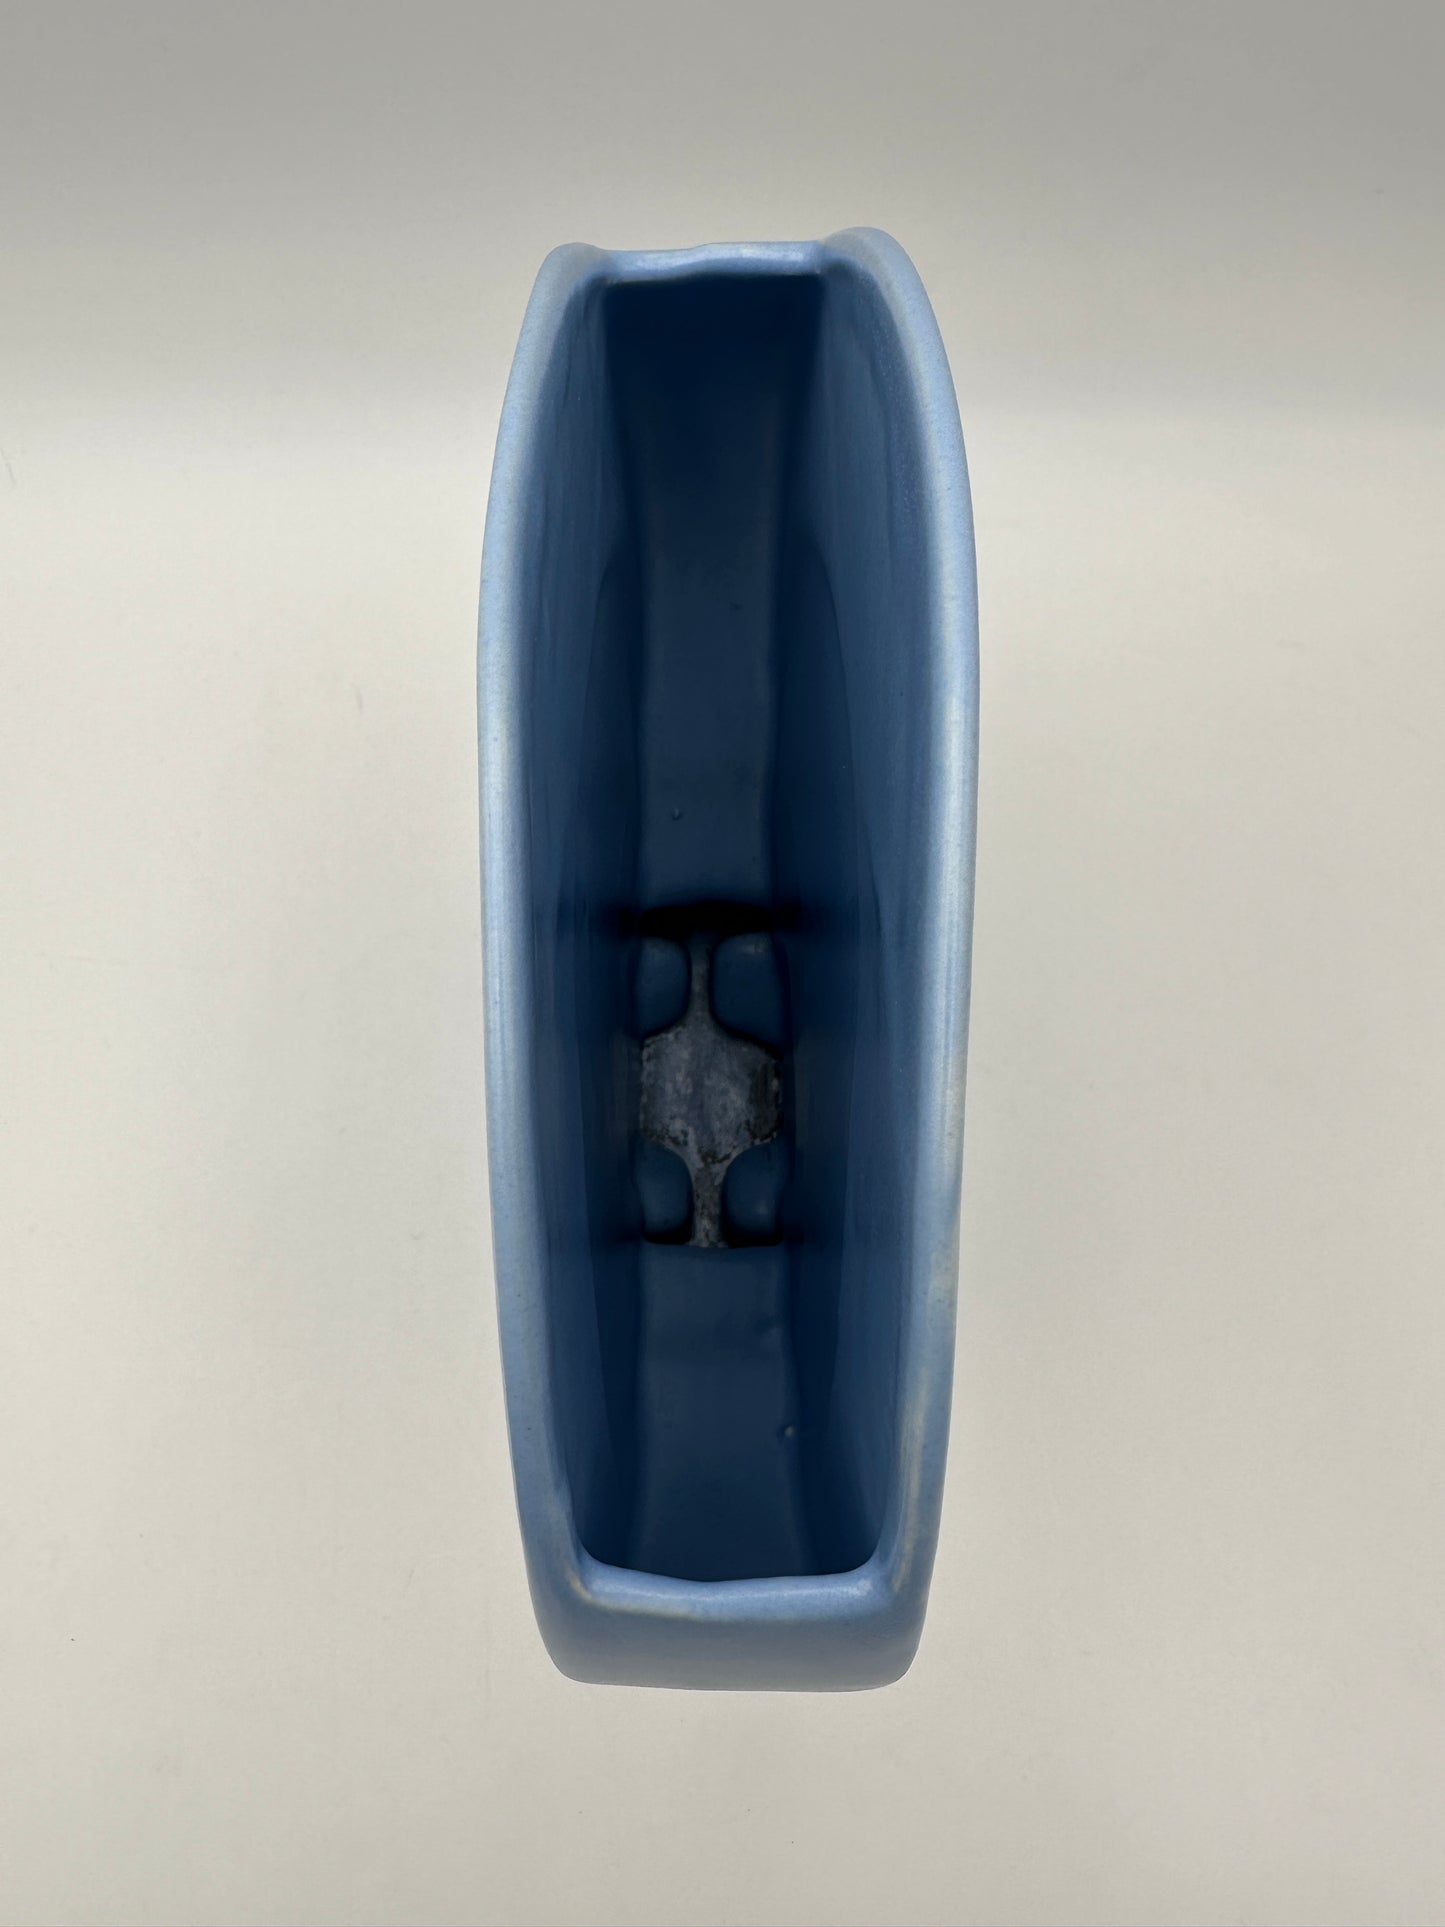 Light Blue Vintage Round Ceramic Pottery Vase